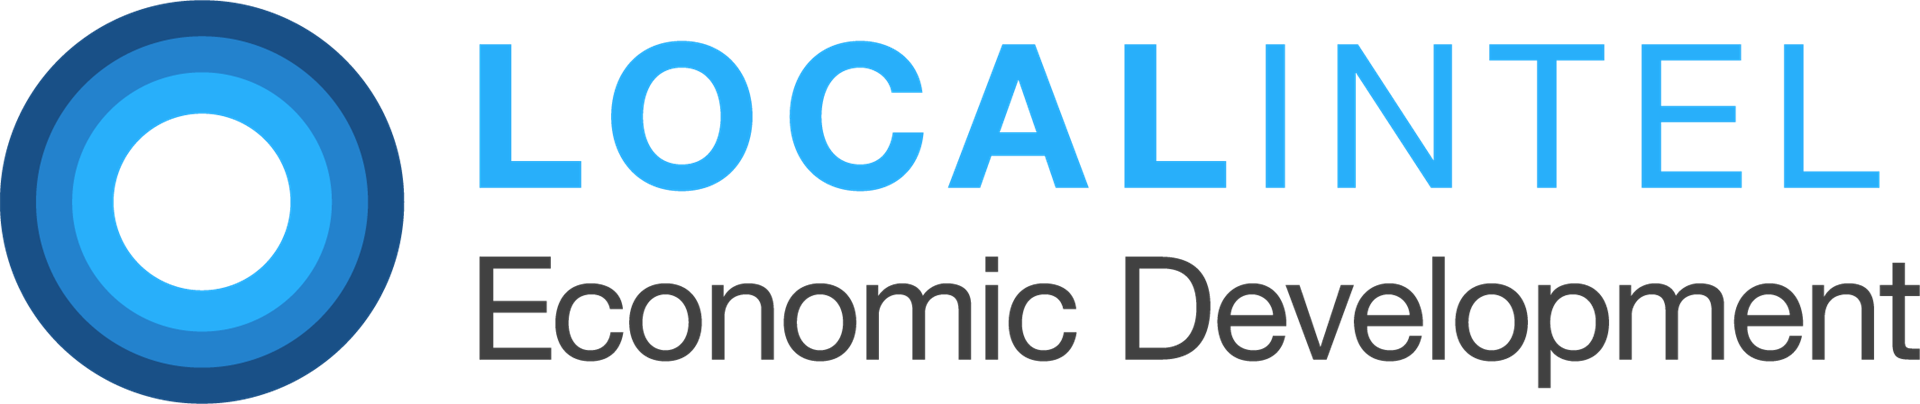 LocalIntel Economic Development logo